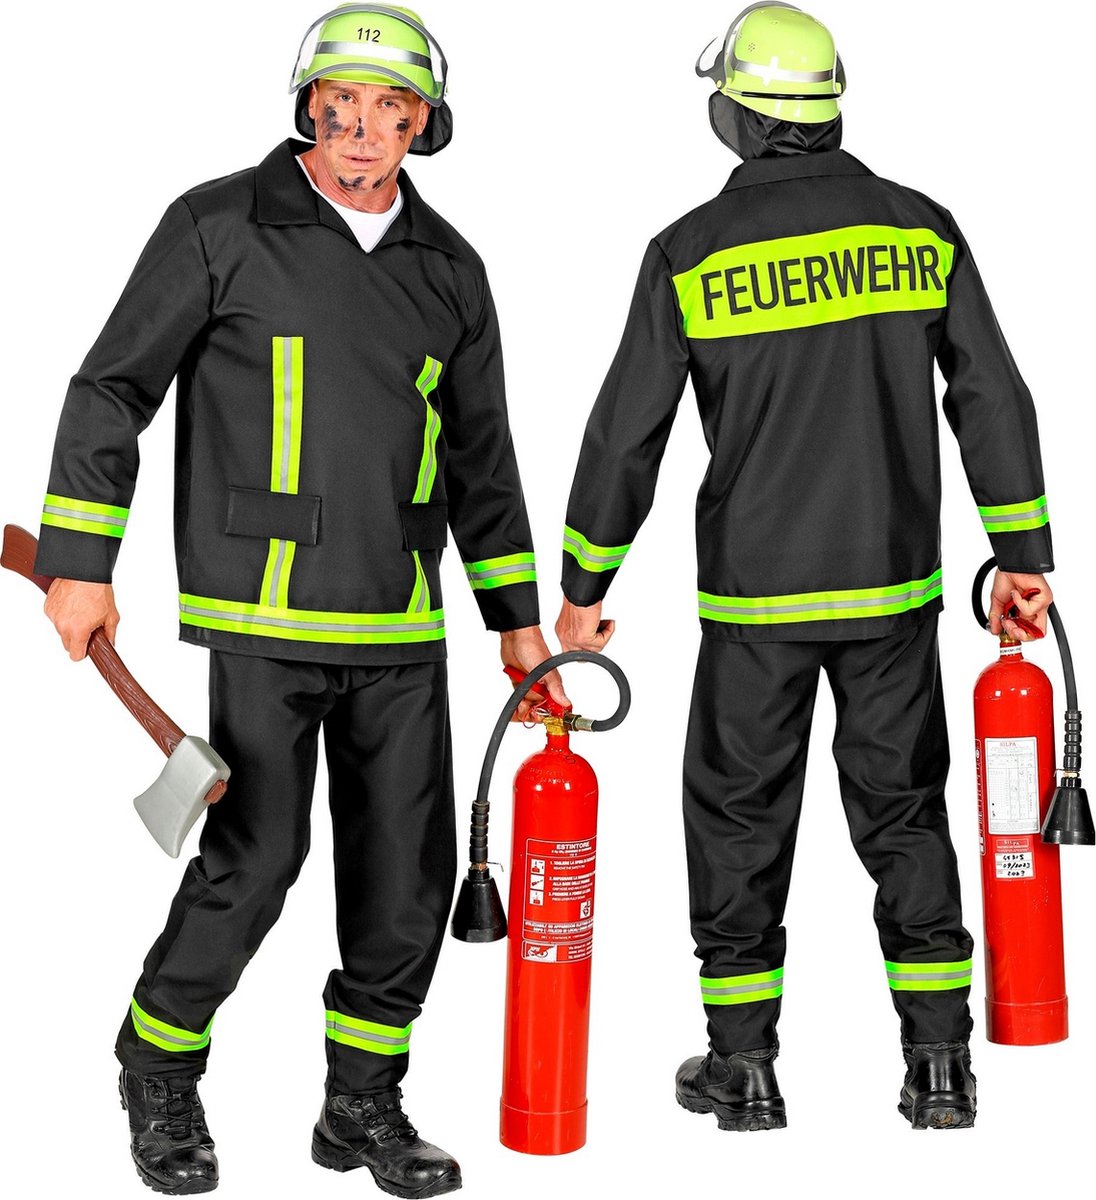 Widmann - Brandweer Kostuum - Brandweerman Feuerwehr Huizenhoge Vlammen Kostuum - Geel, Zwart - XL - Carnavalskleding - Verkleedkleding